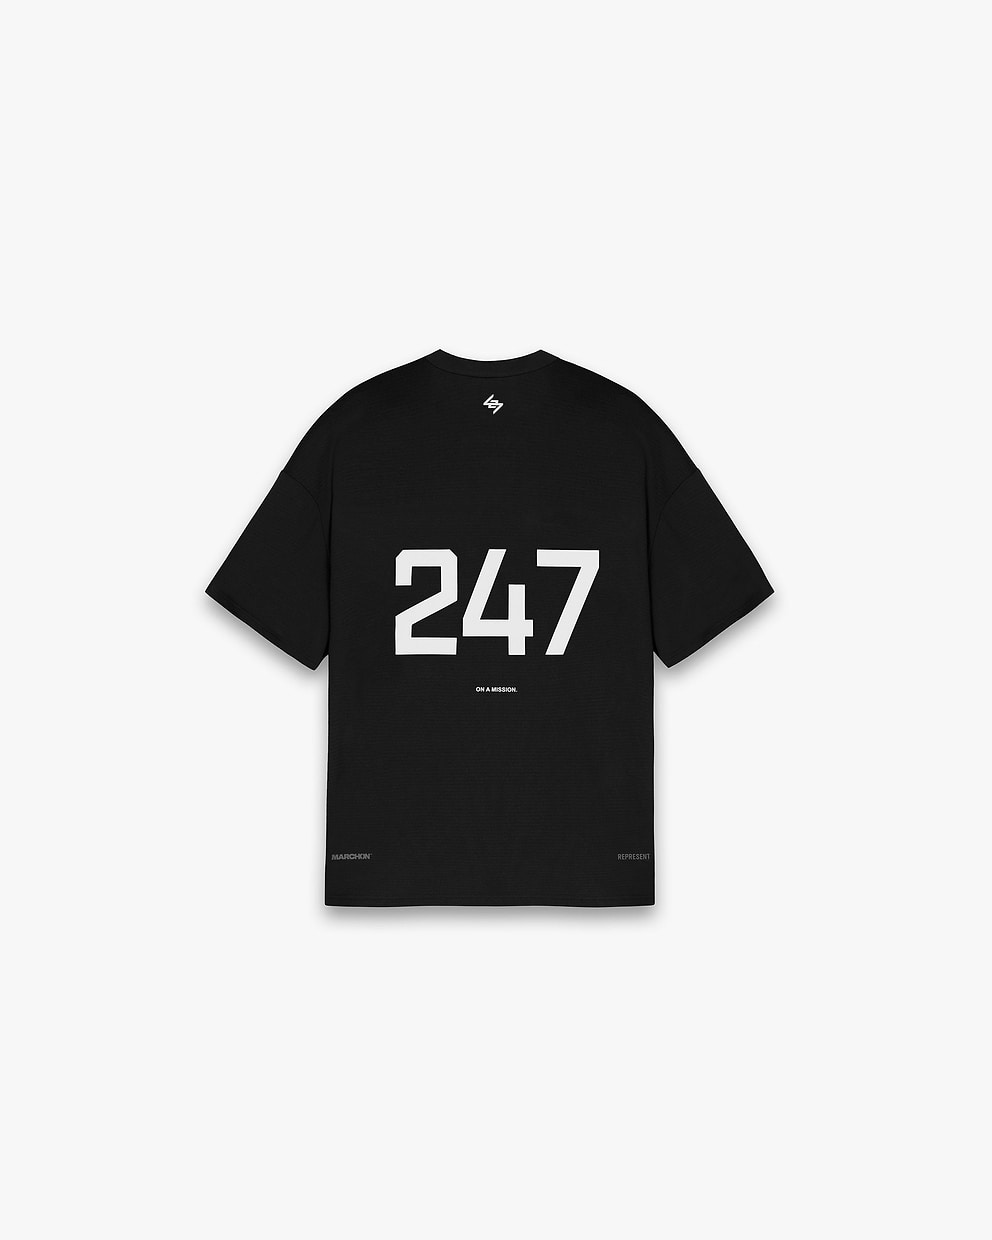 Team 247 Oversized T-Shirt x Marchon - Black